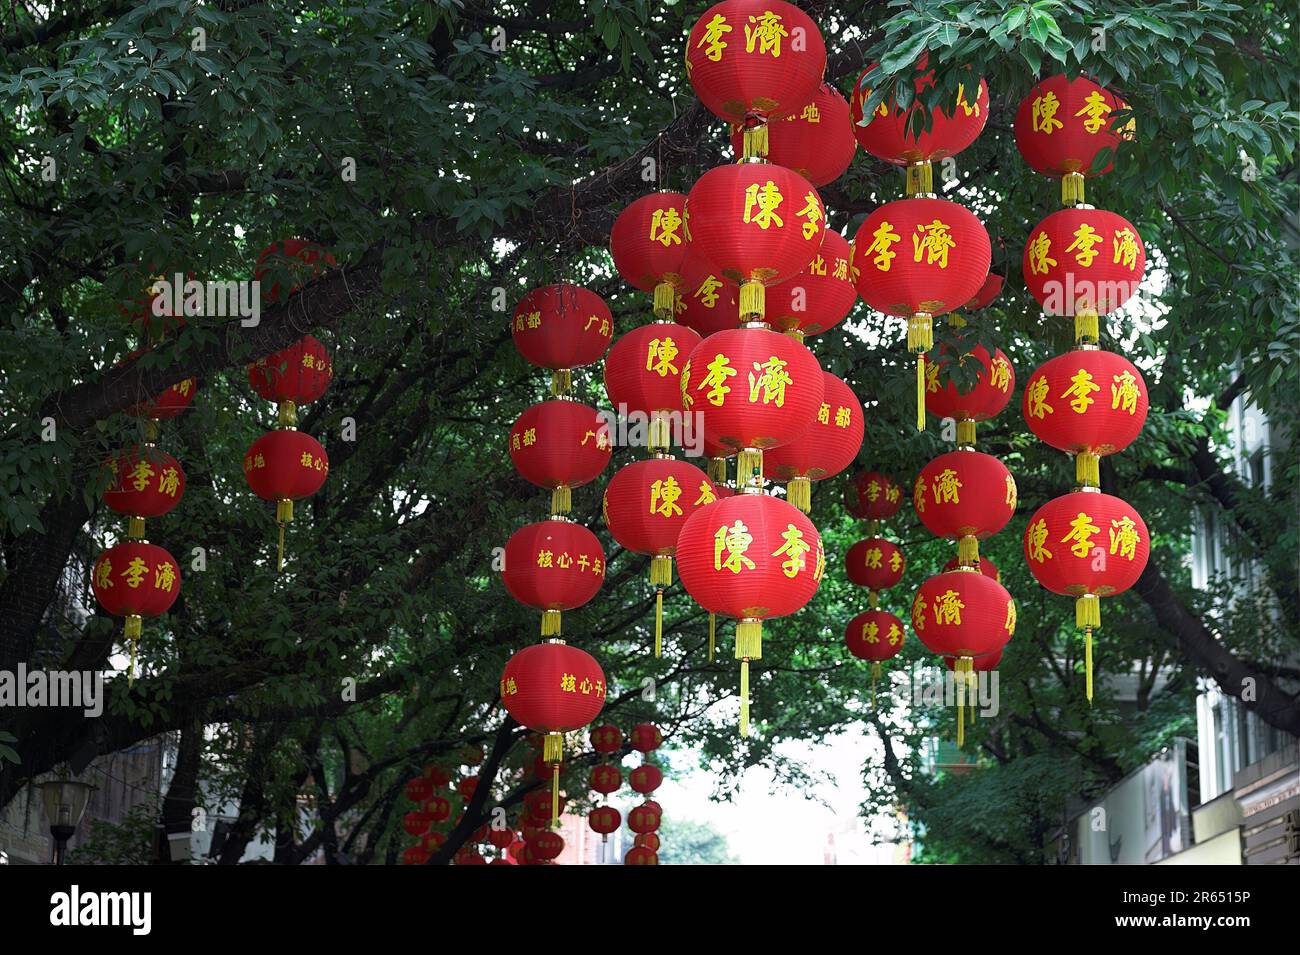 广州市 中國 Guangzhou, China; Chinese red lanterns hanging on a tree. Chinesische rote Laternen hängen an einem Baum.  中國紅燈籠掛在樹上。 Stock Photo